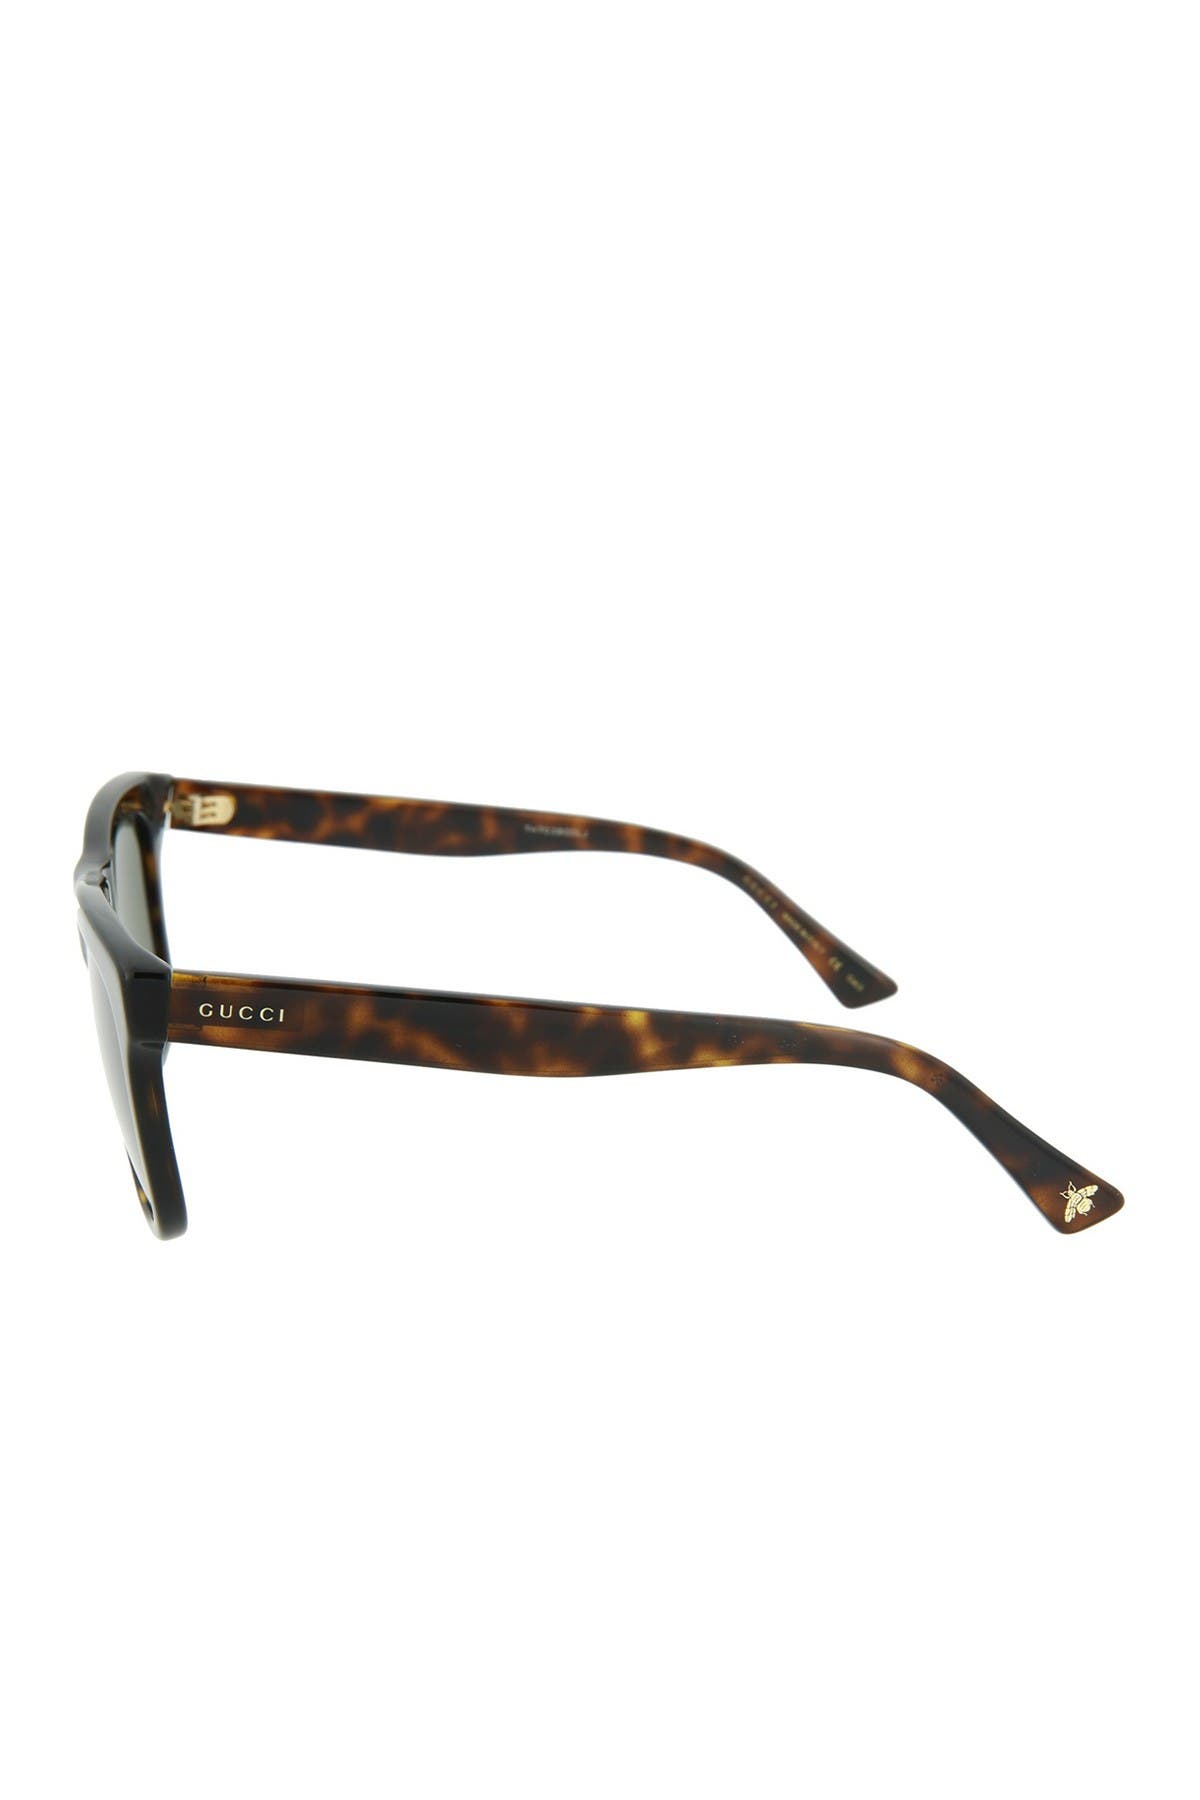 GUCCI | 54mm Square Sunglasses | Nordstrom Rack